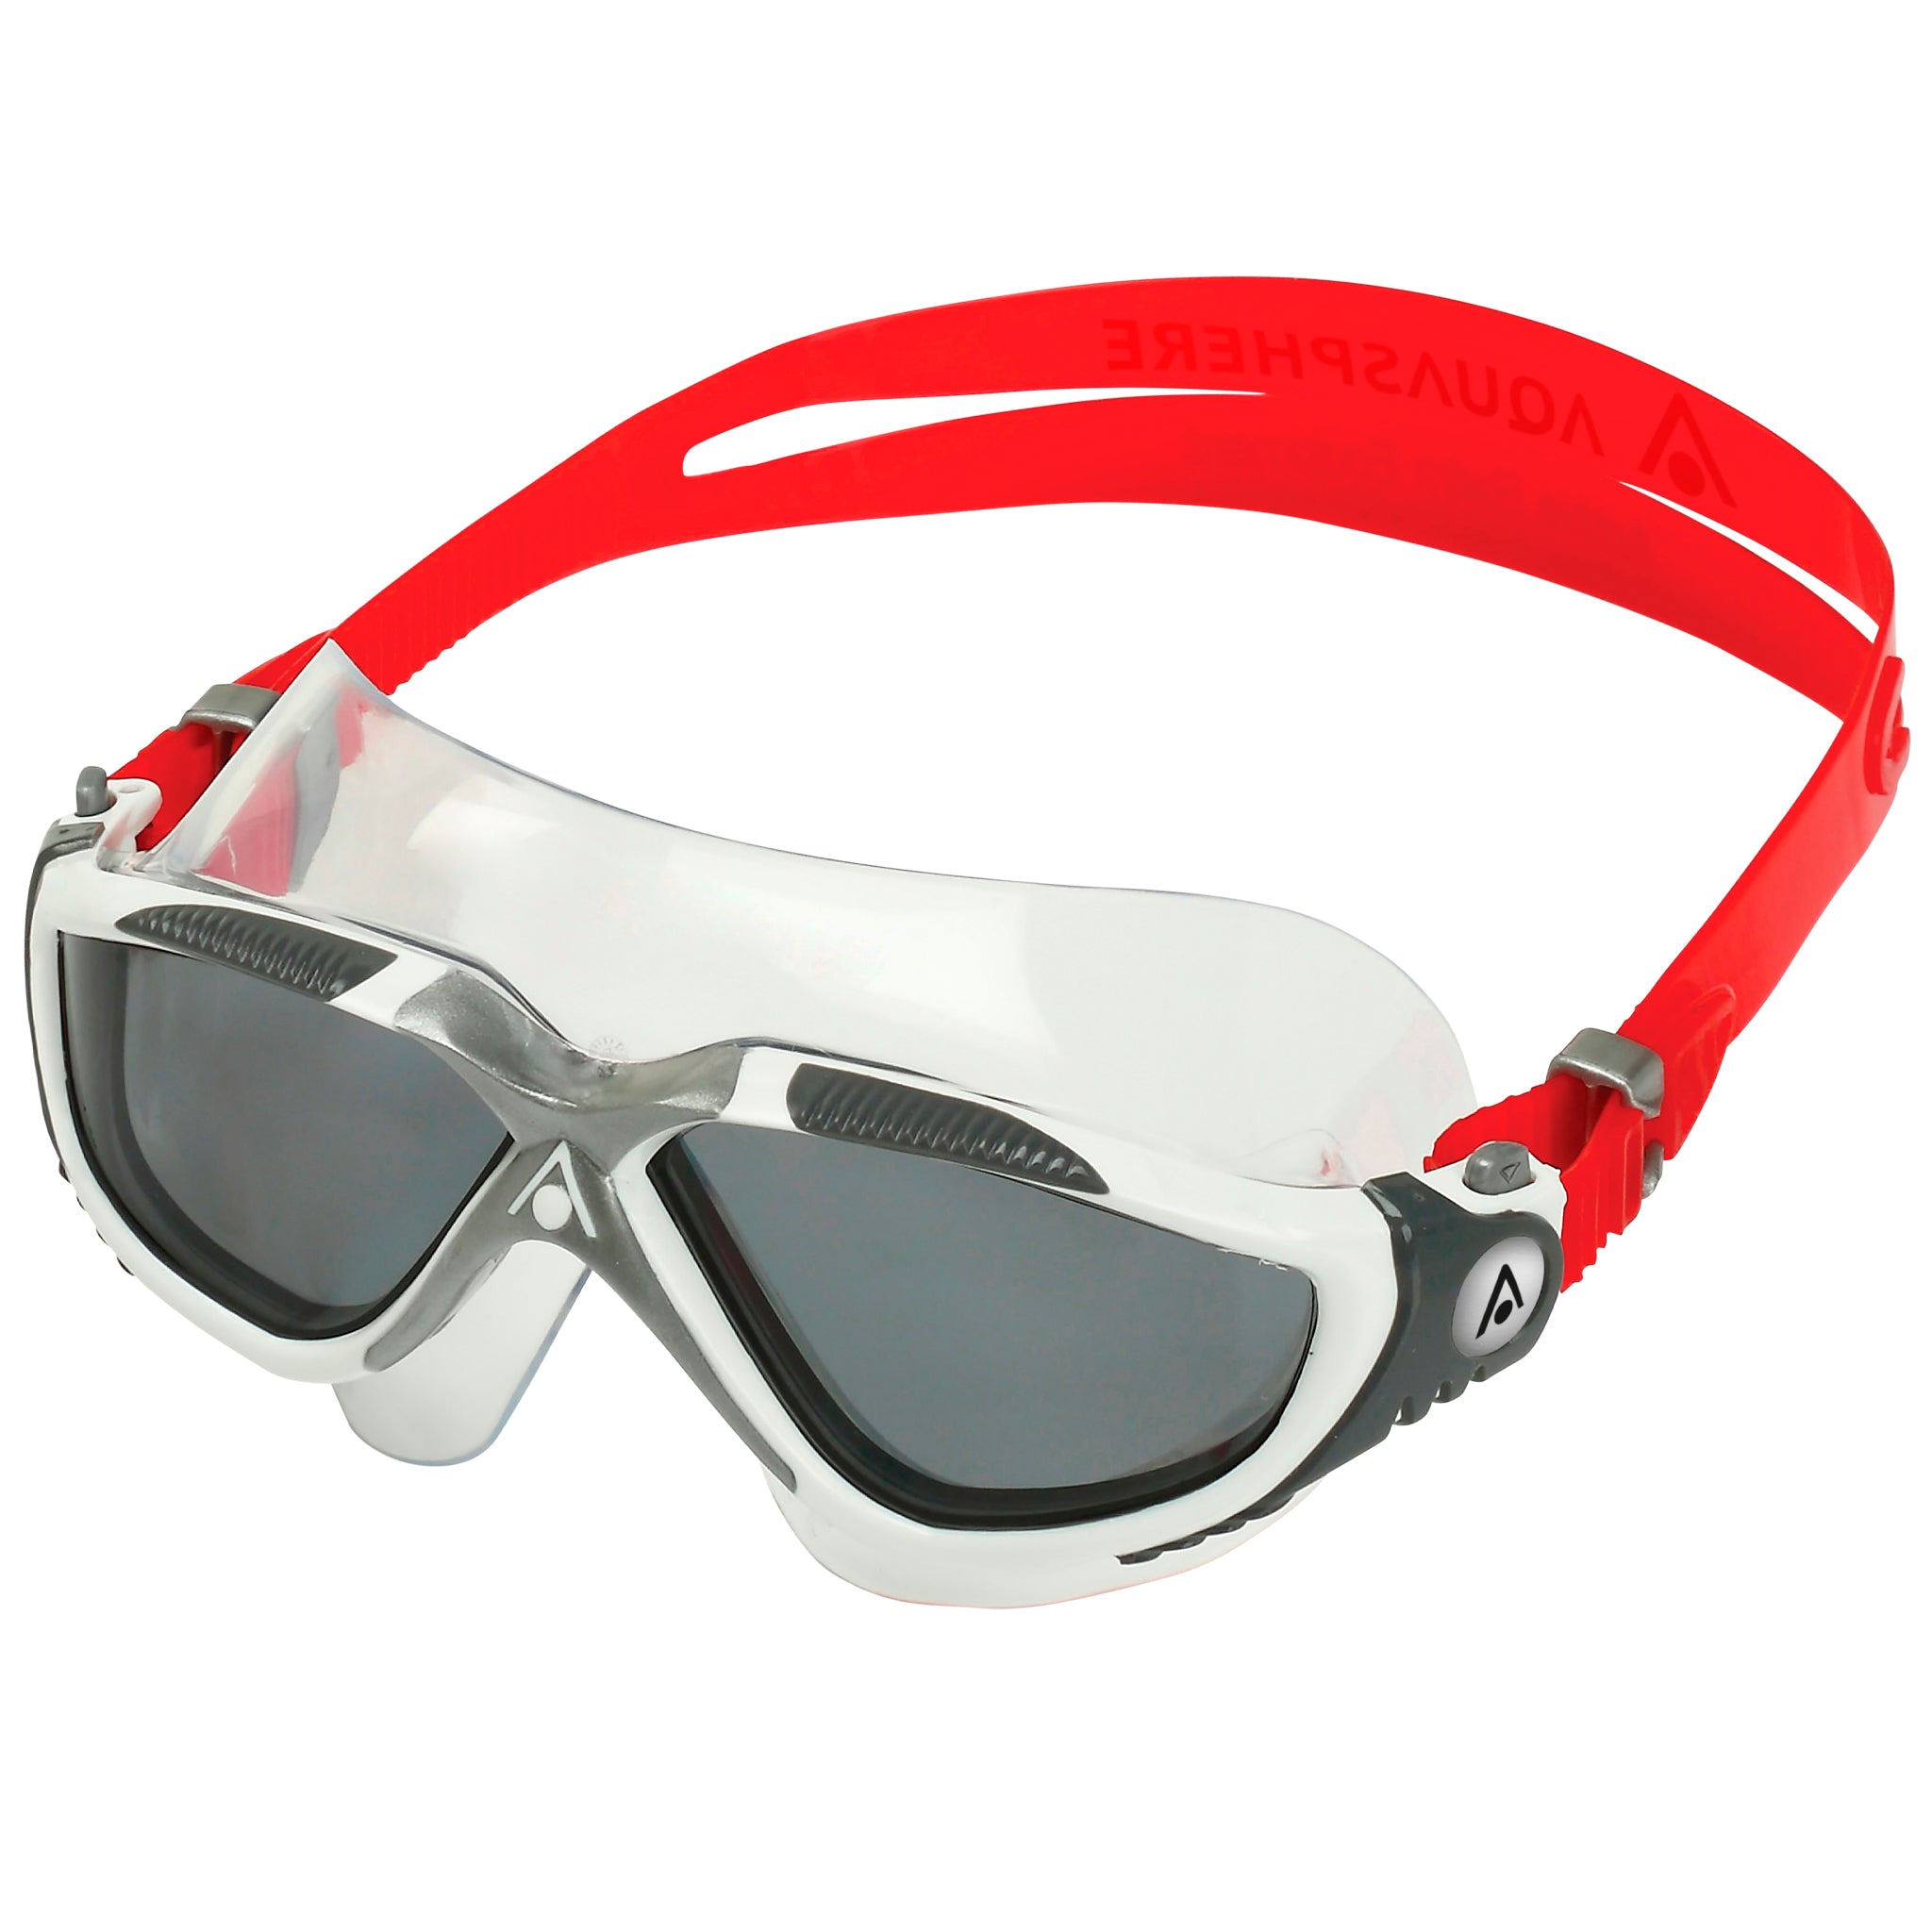 Aquasphere Vista Swimming Goggles Mask Smoke Tinted Lenses | White/Silver